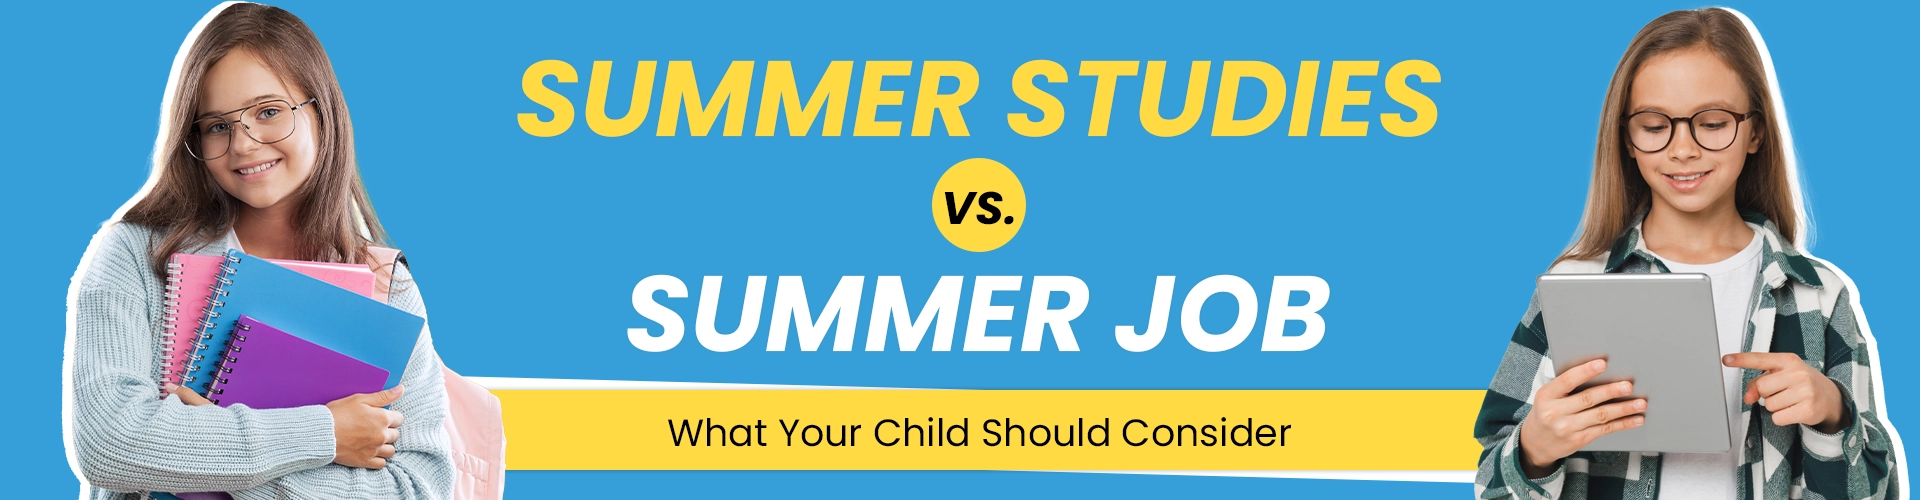 Summer Studies Vs. Summer Job - What Your Child Should Consider